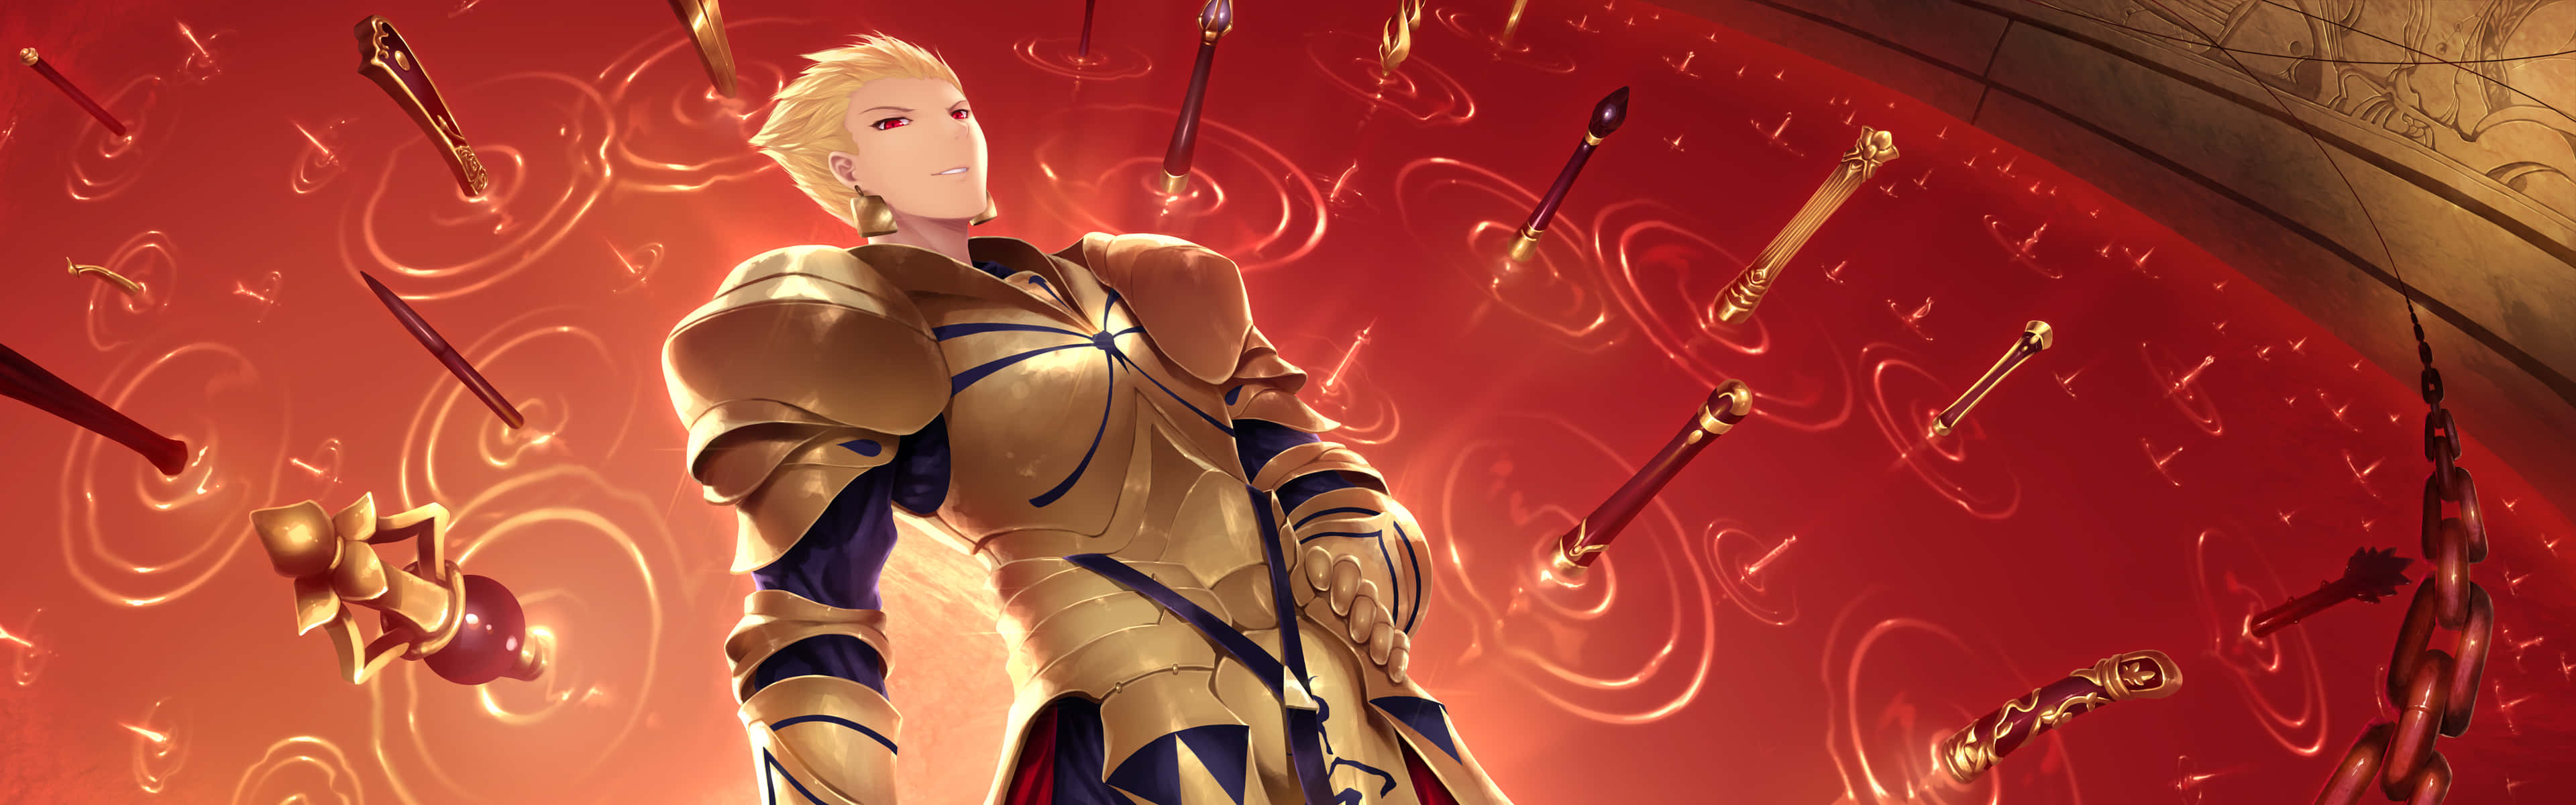 Download Gilgamesh In Battle Armor - Fate Grand Order Game Artwork ...